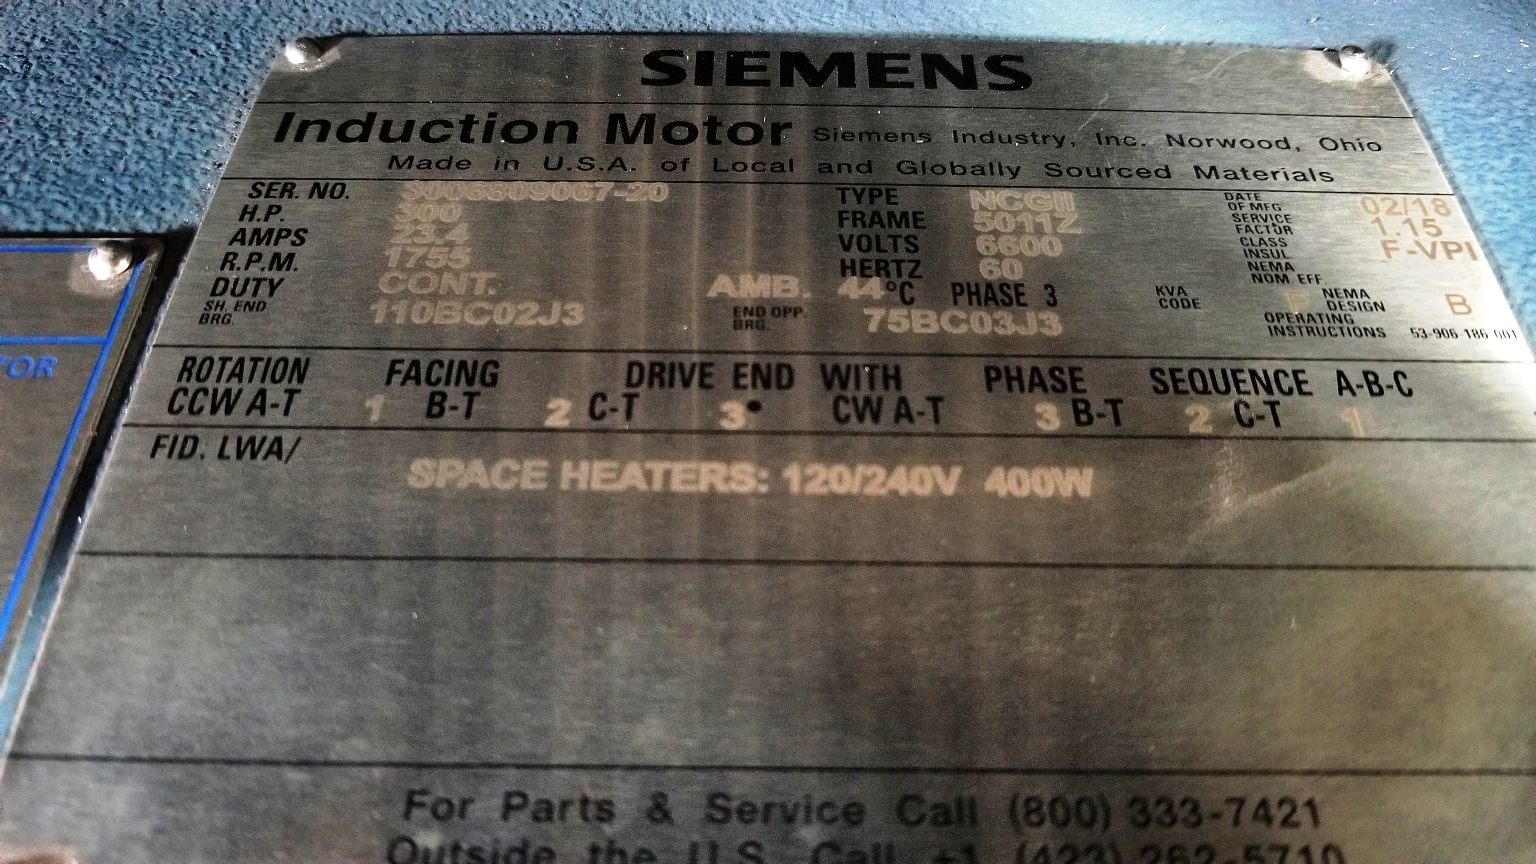 Siemens 300 HP 1800 RPM 5011Z Squirrel Cage Motors 78478